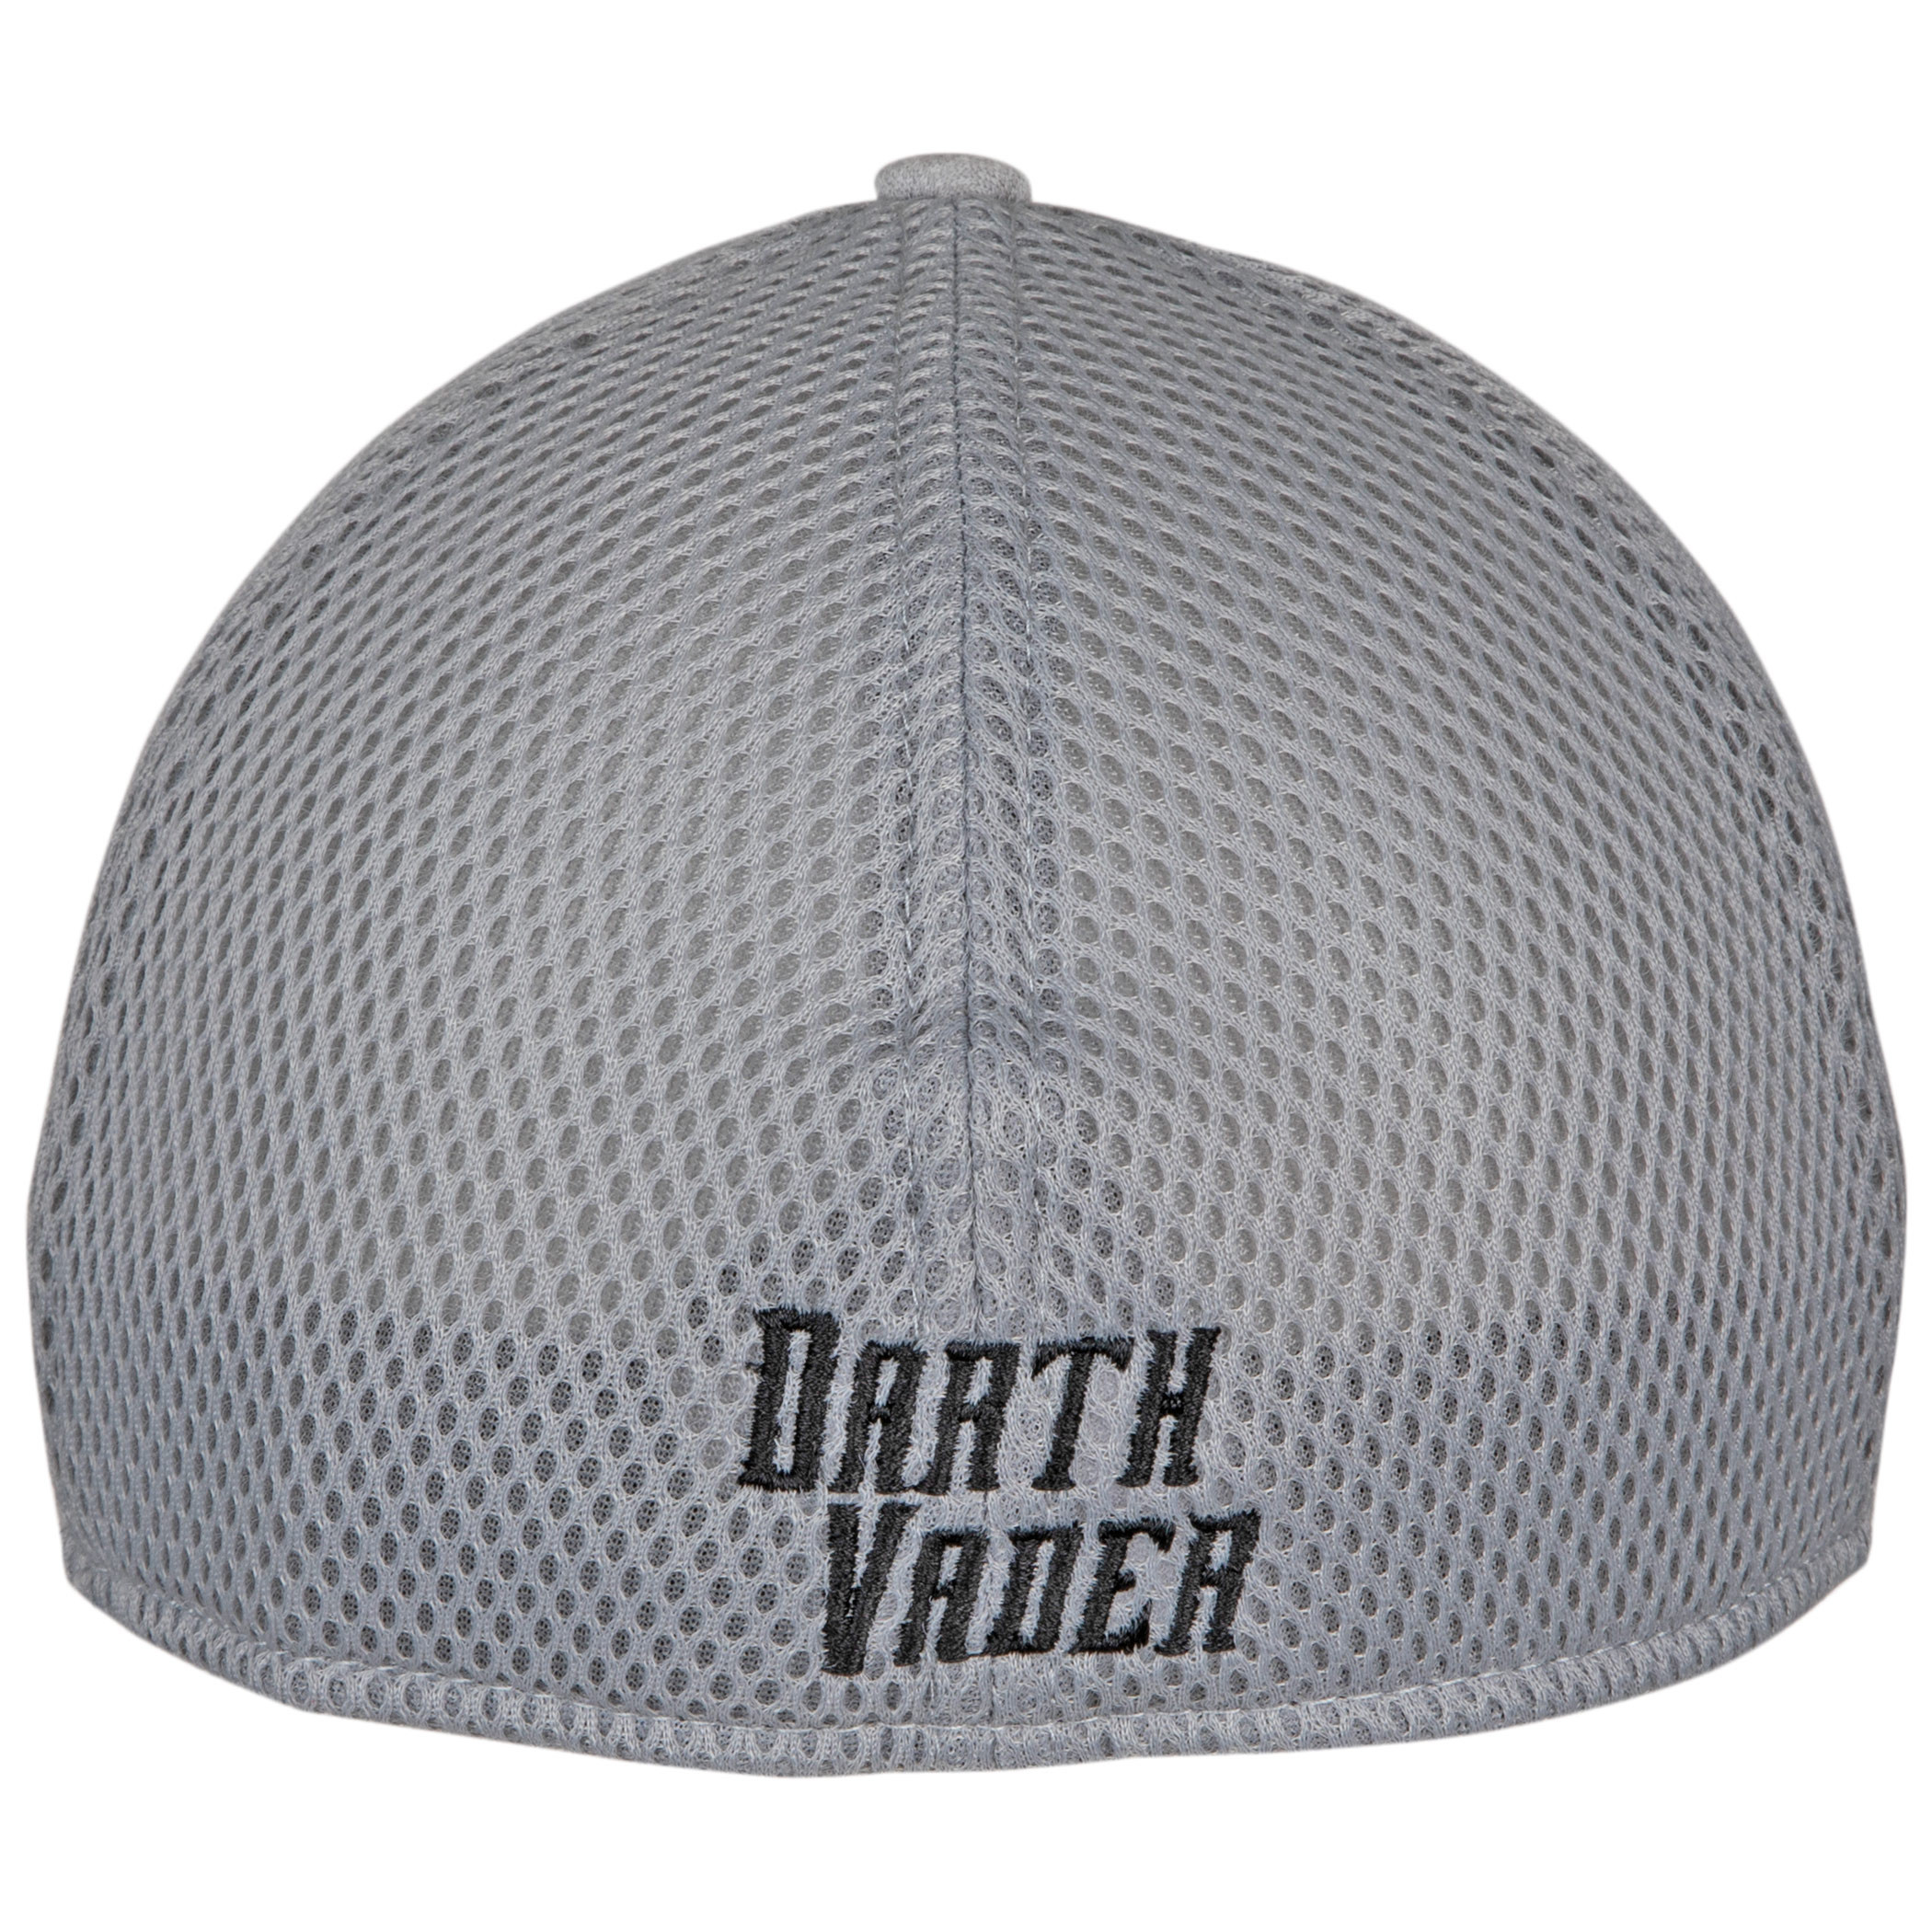 Star Wars Darth Vader Head Shadow Tech New Era 39Thirty Fitted Hat